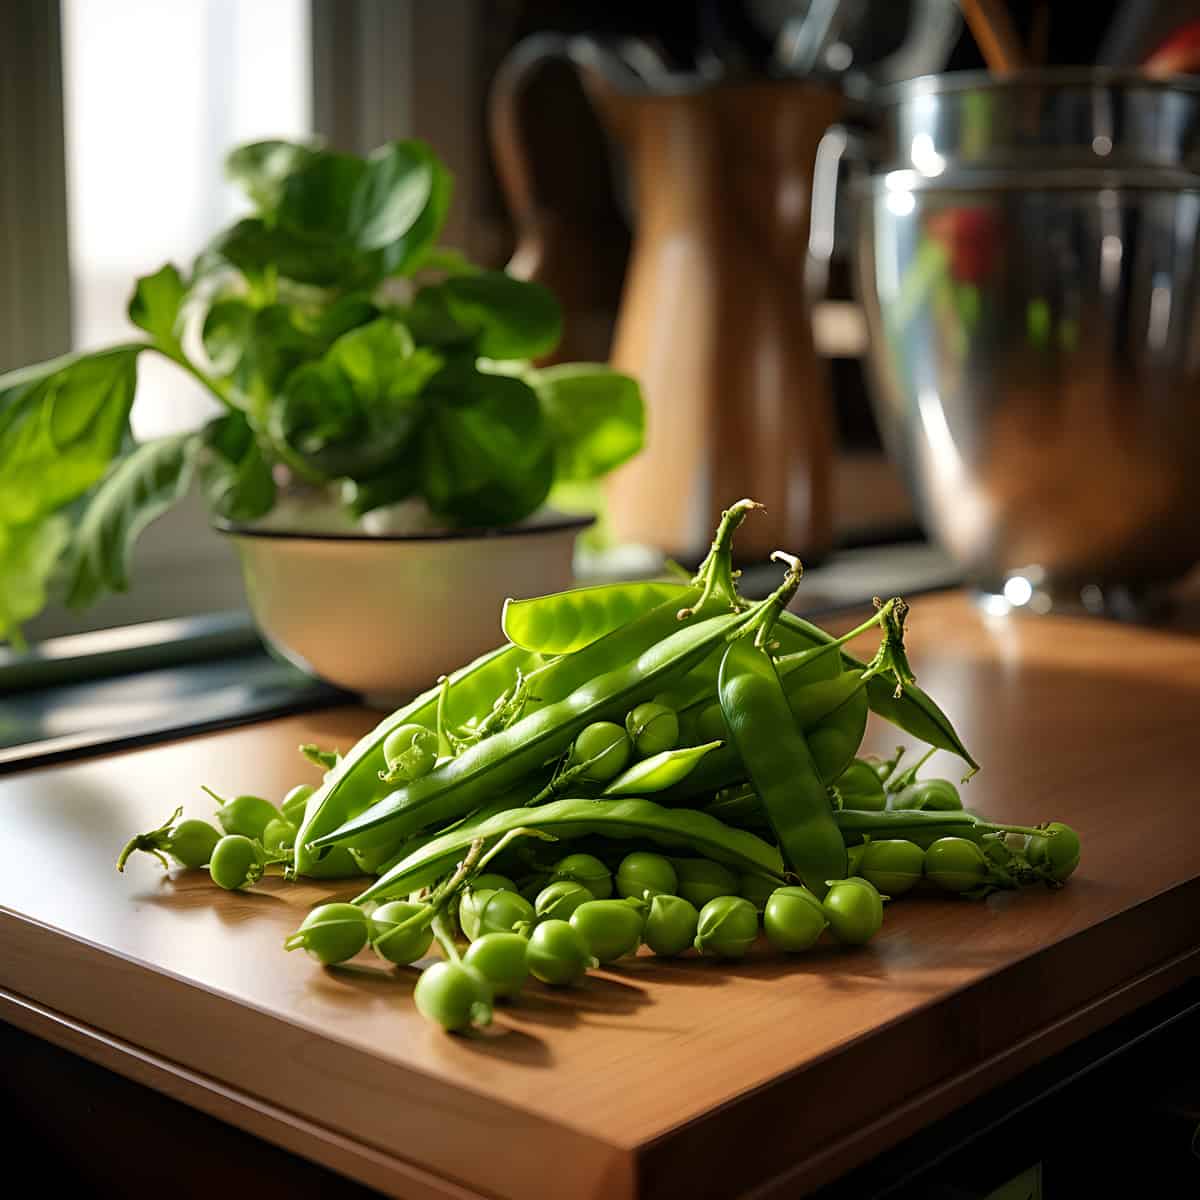 Garden Peas on a kitchen counter